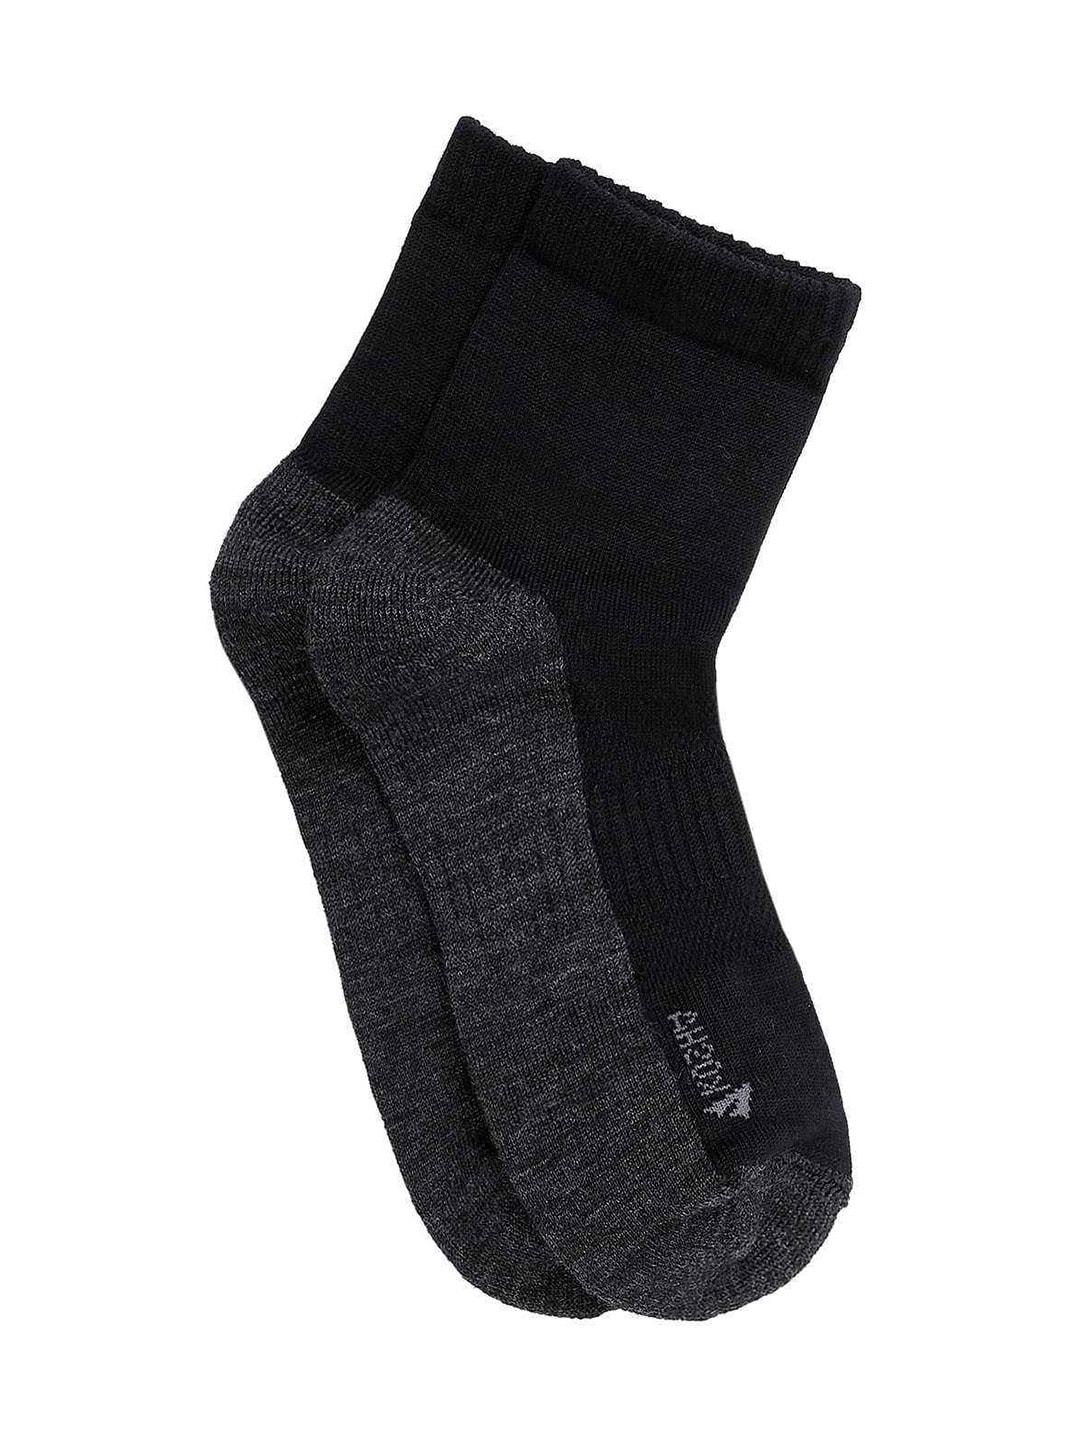 kosha boys black & grey colourblocked above ankle-length socks